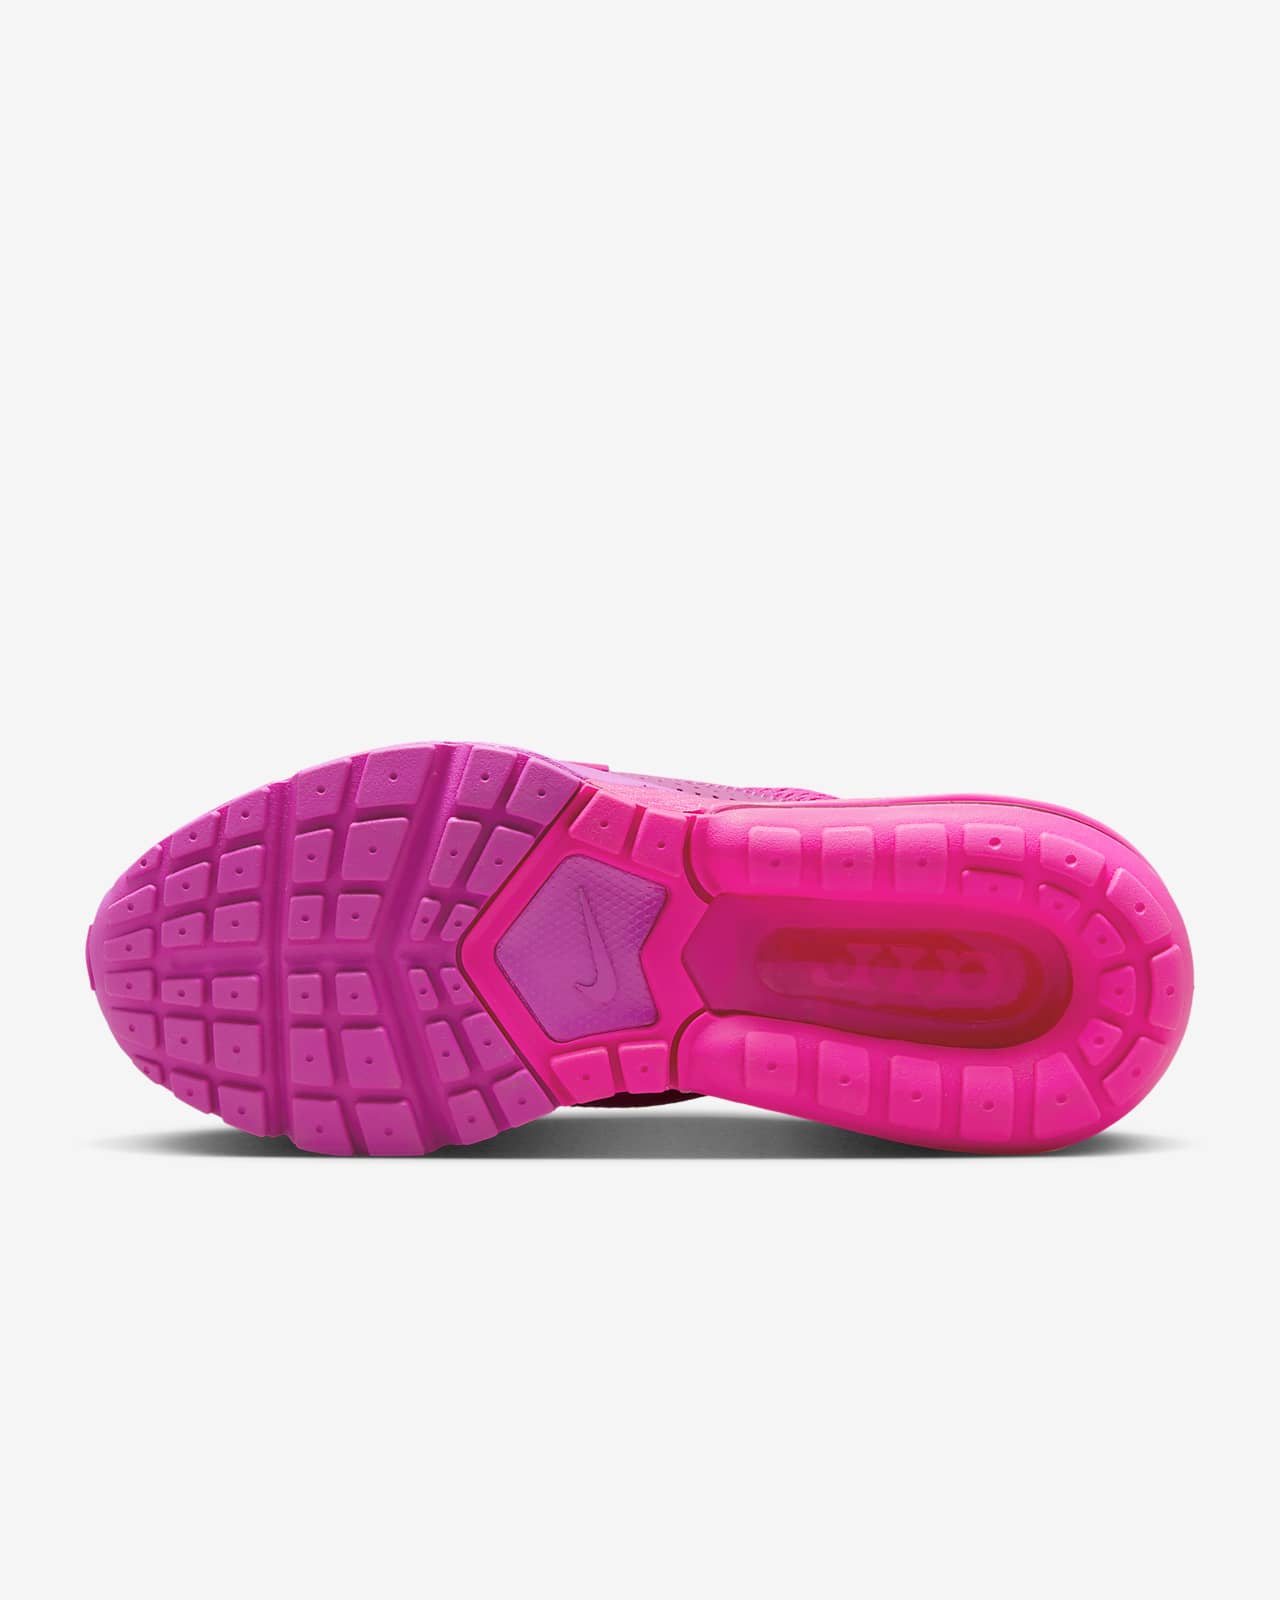 Nike Air Max 720 Pink Sea Blue 2019 Size Women’s 7